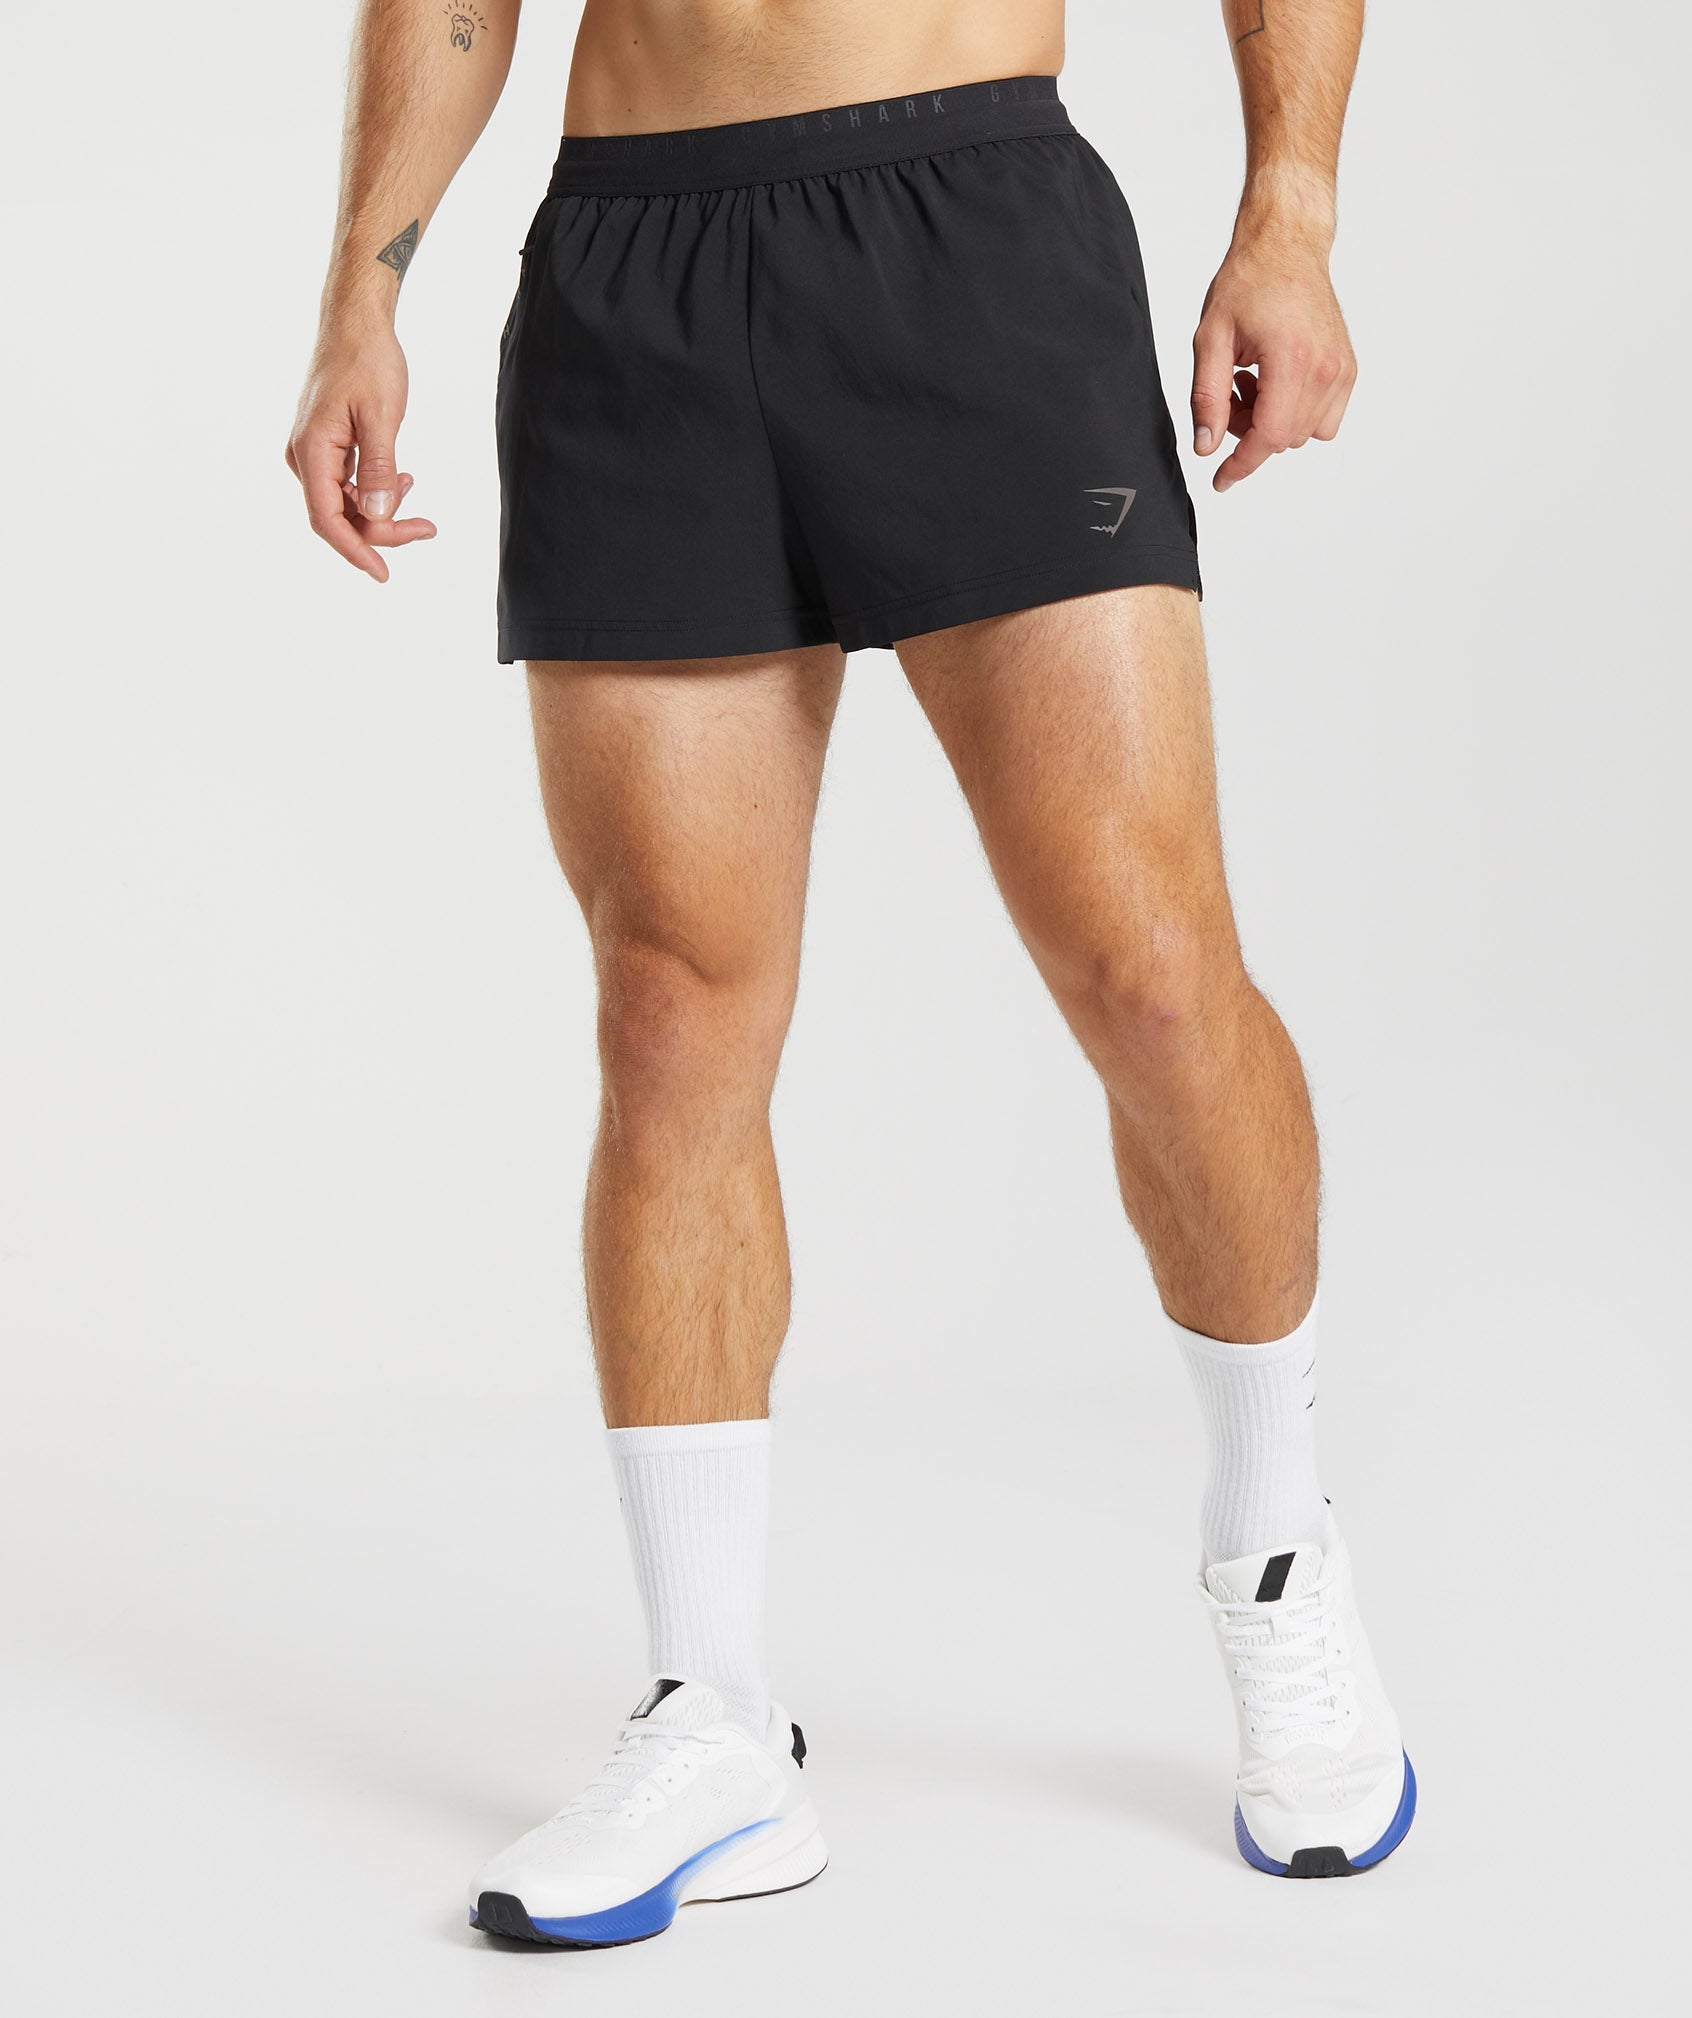 rima dignidad Multitud Gymshark Run Sport 3" Shorts - Black | Gymshark